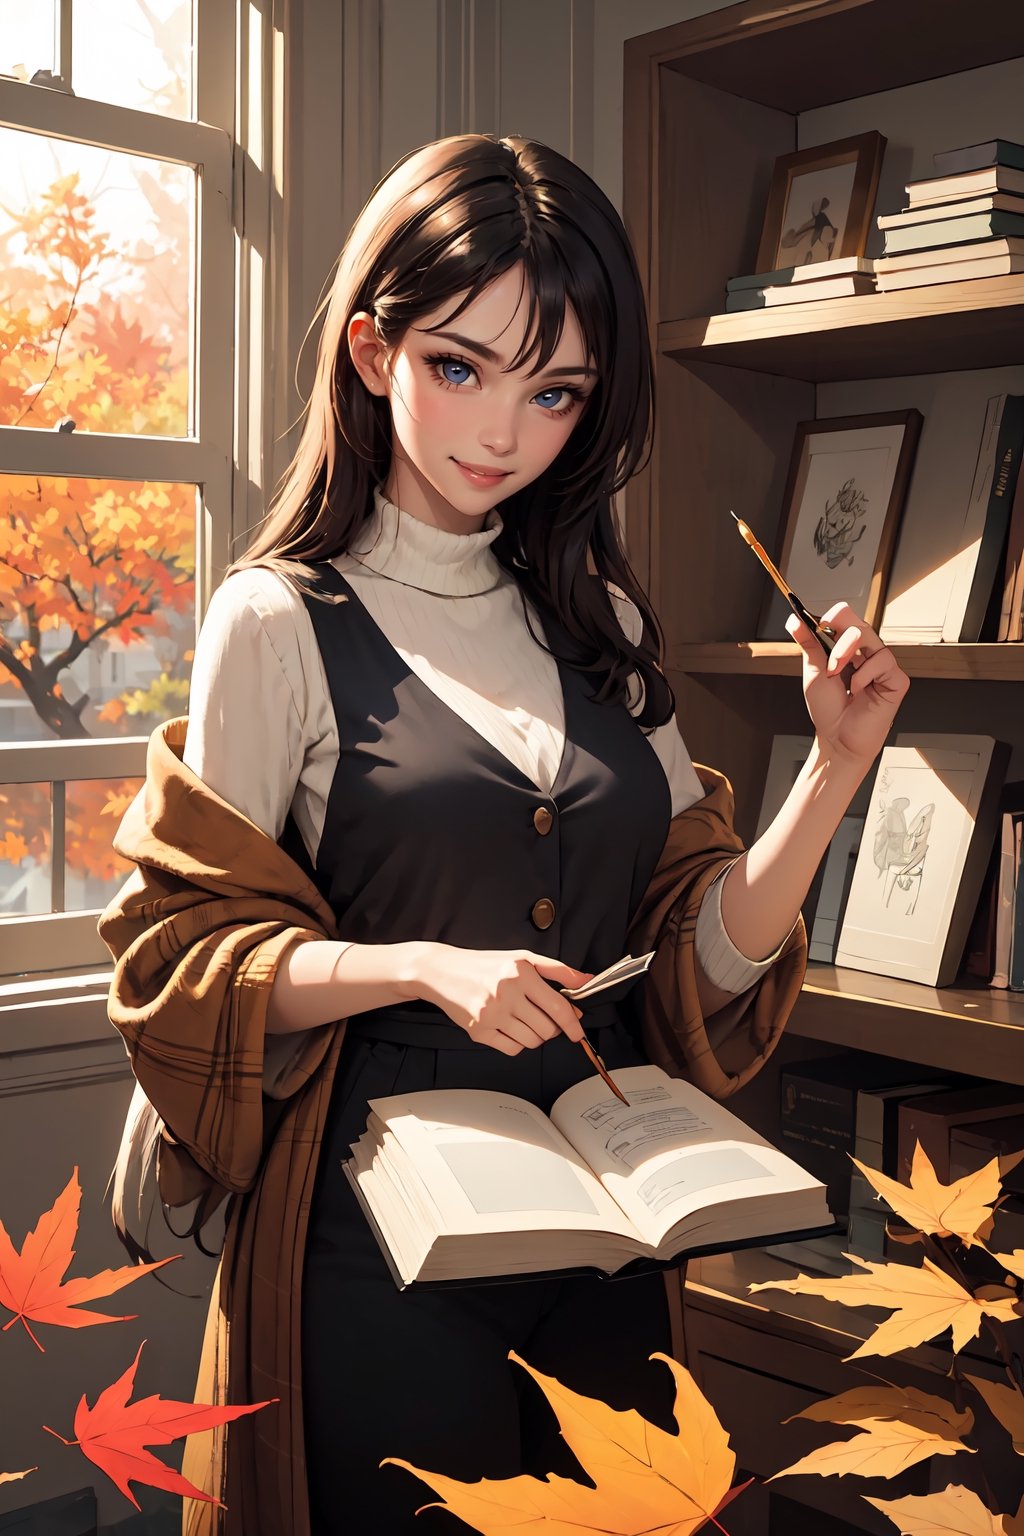 Autumn book preparation campaign, wonderful artwork,